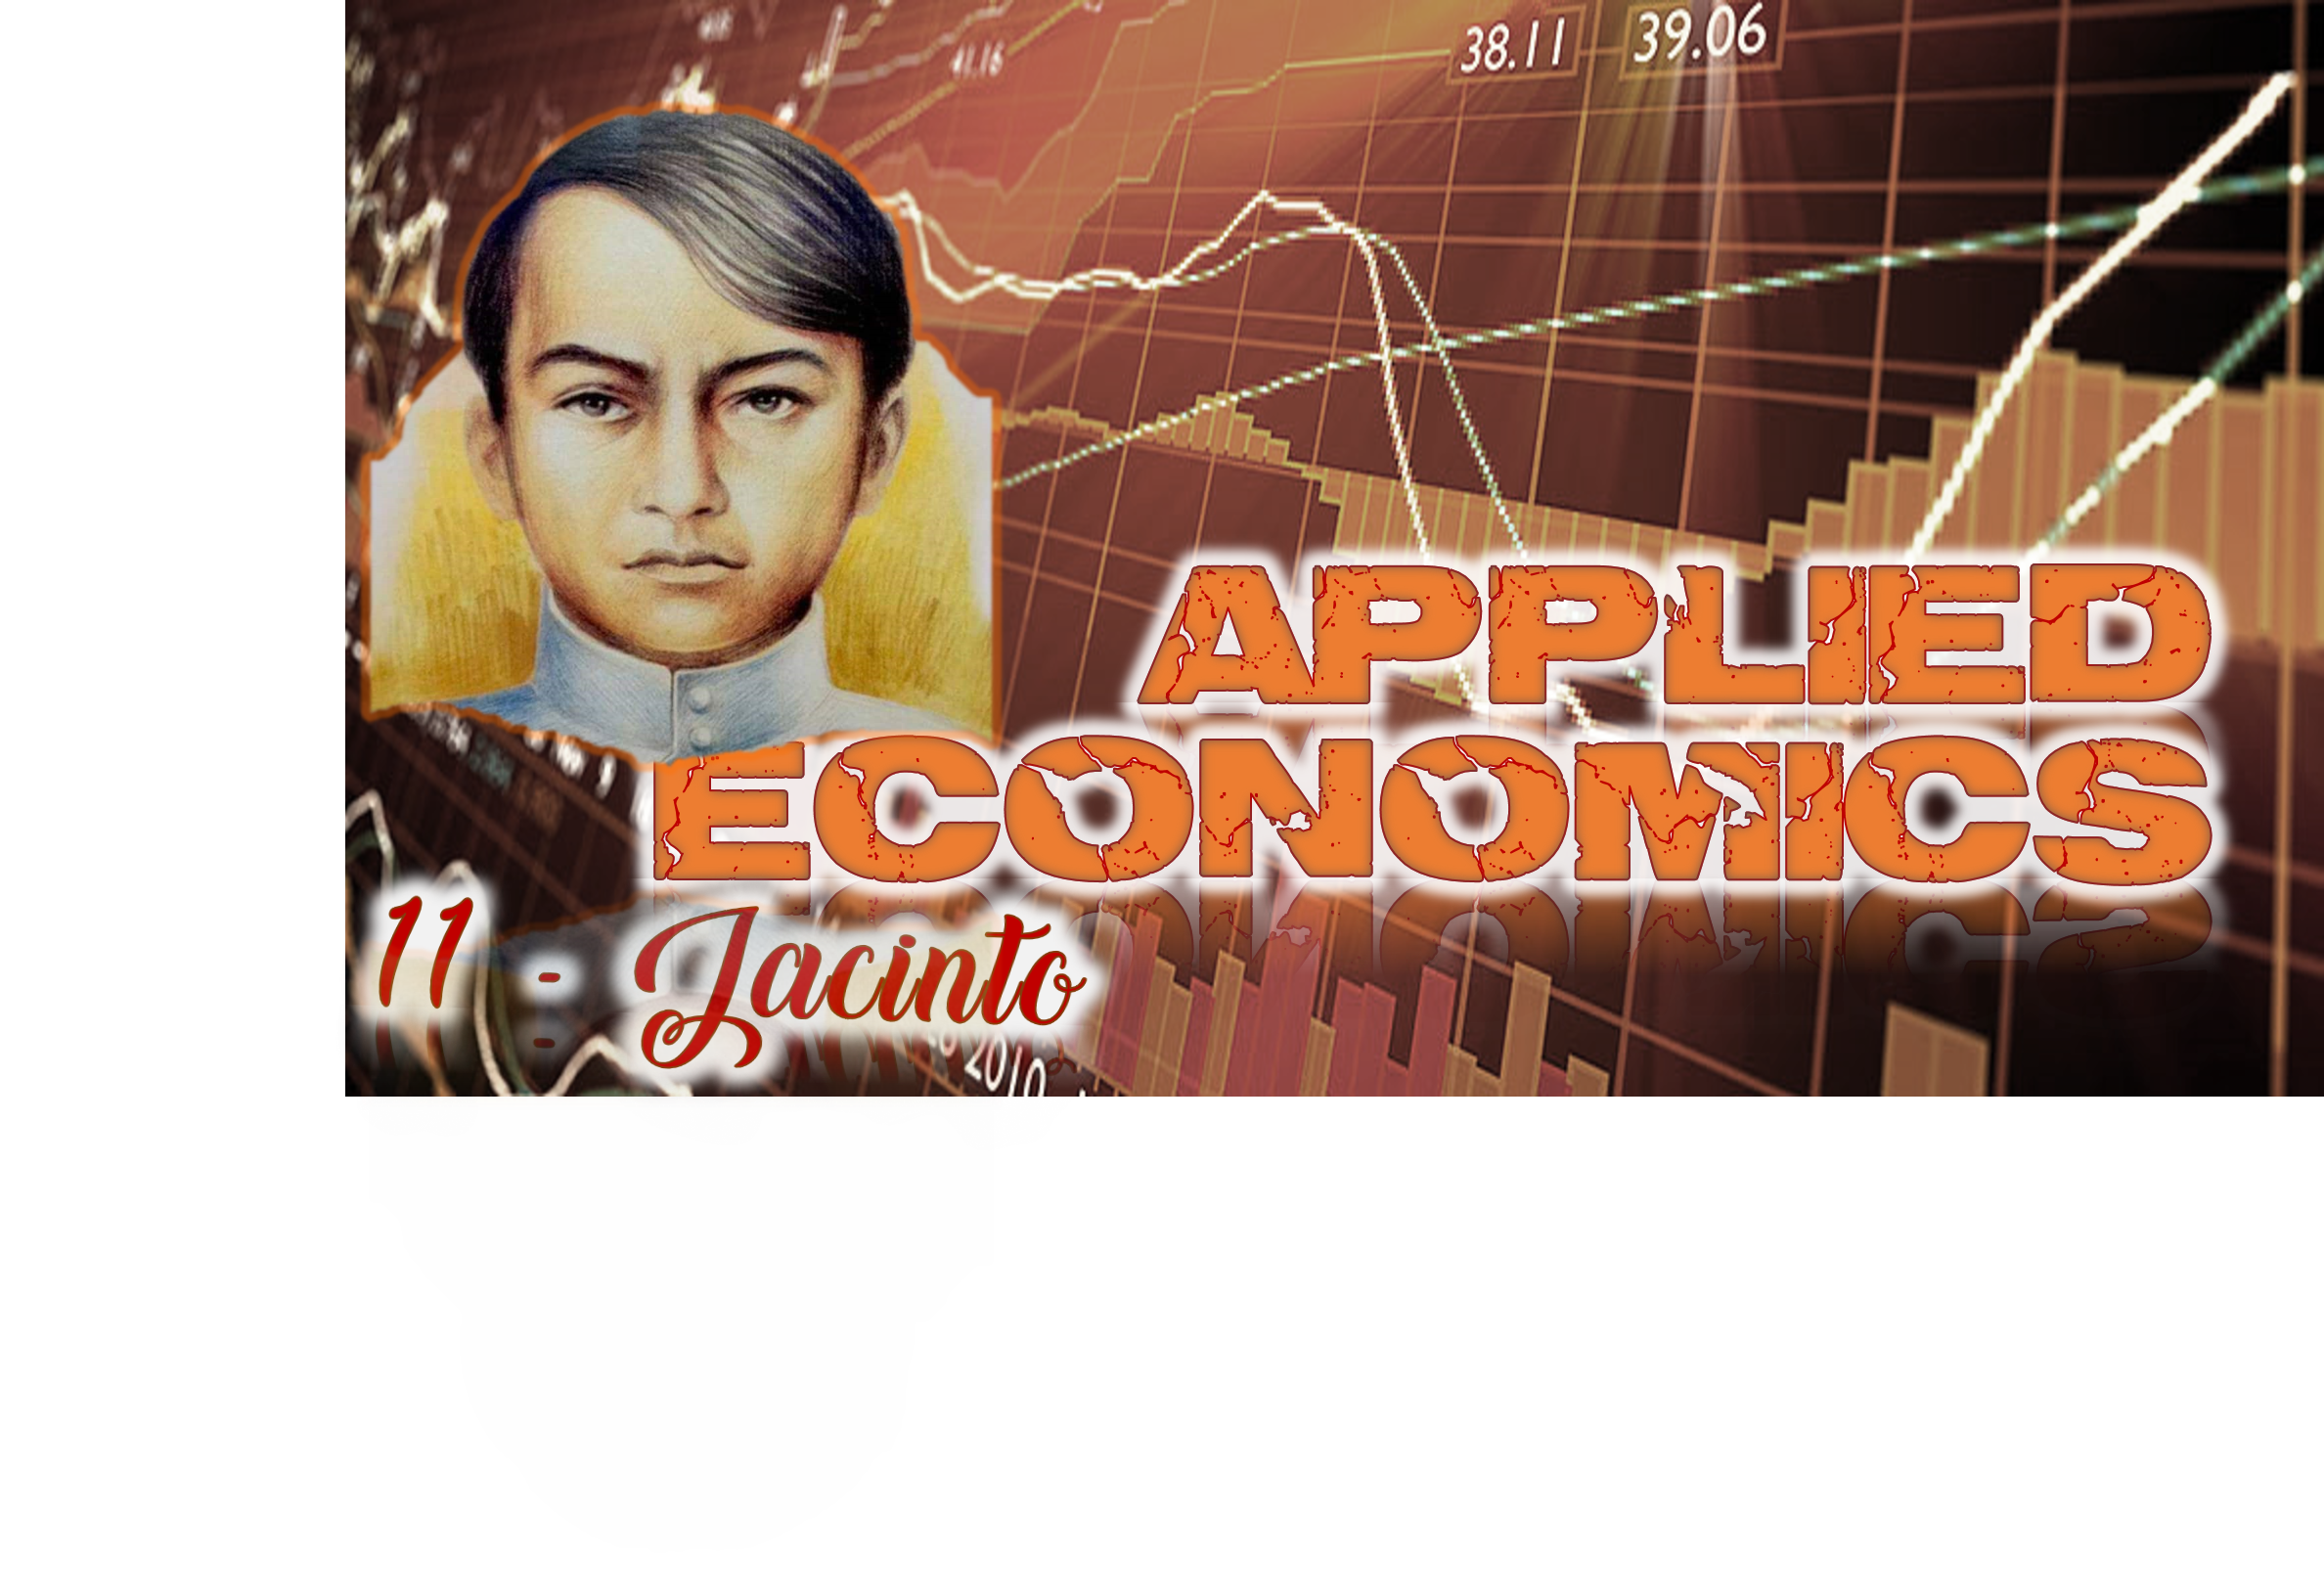 JACINTO-Applied Economics